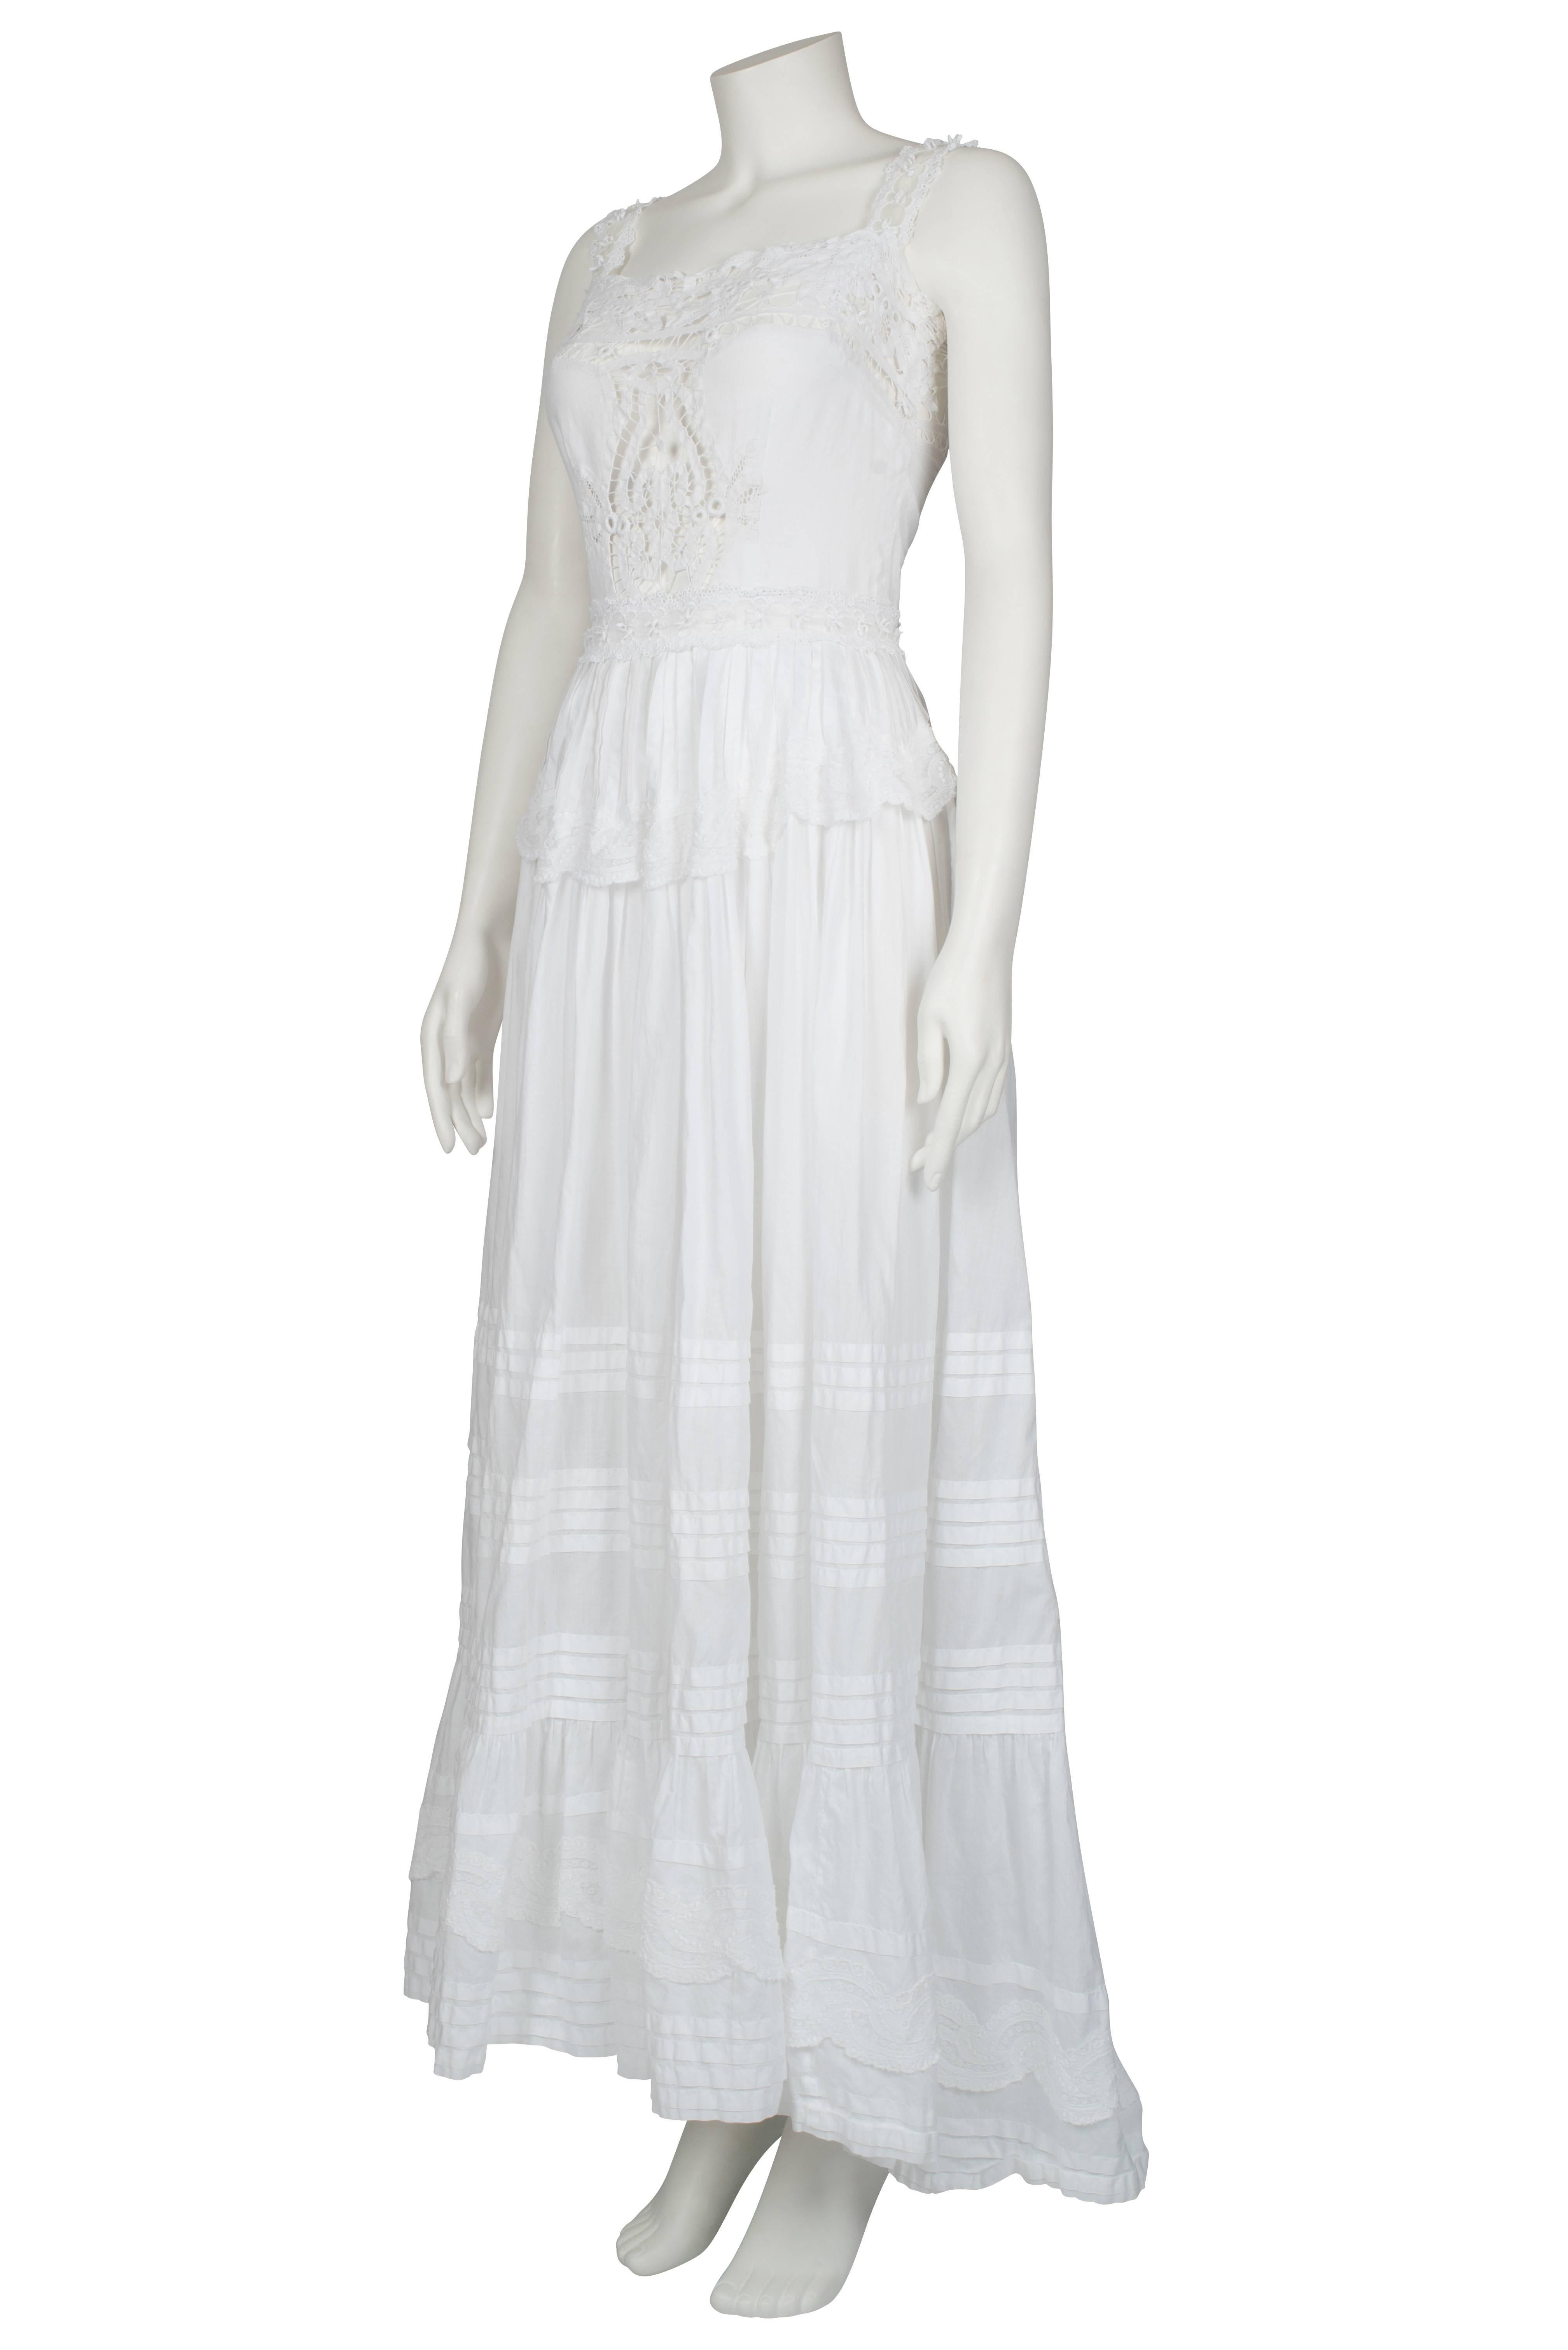 Theodora van Runkle Designed 'Victorian Style' Dress ca 1970 For Sale 1